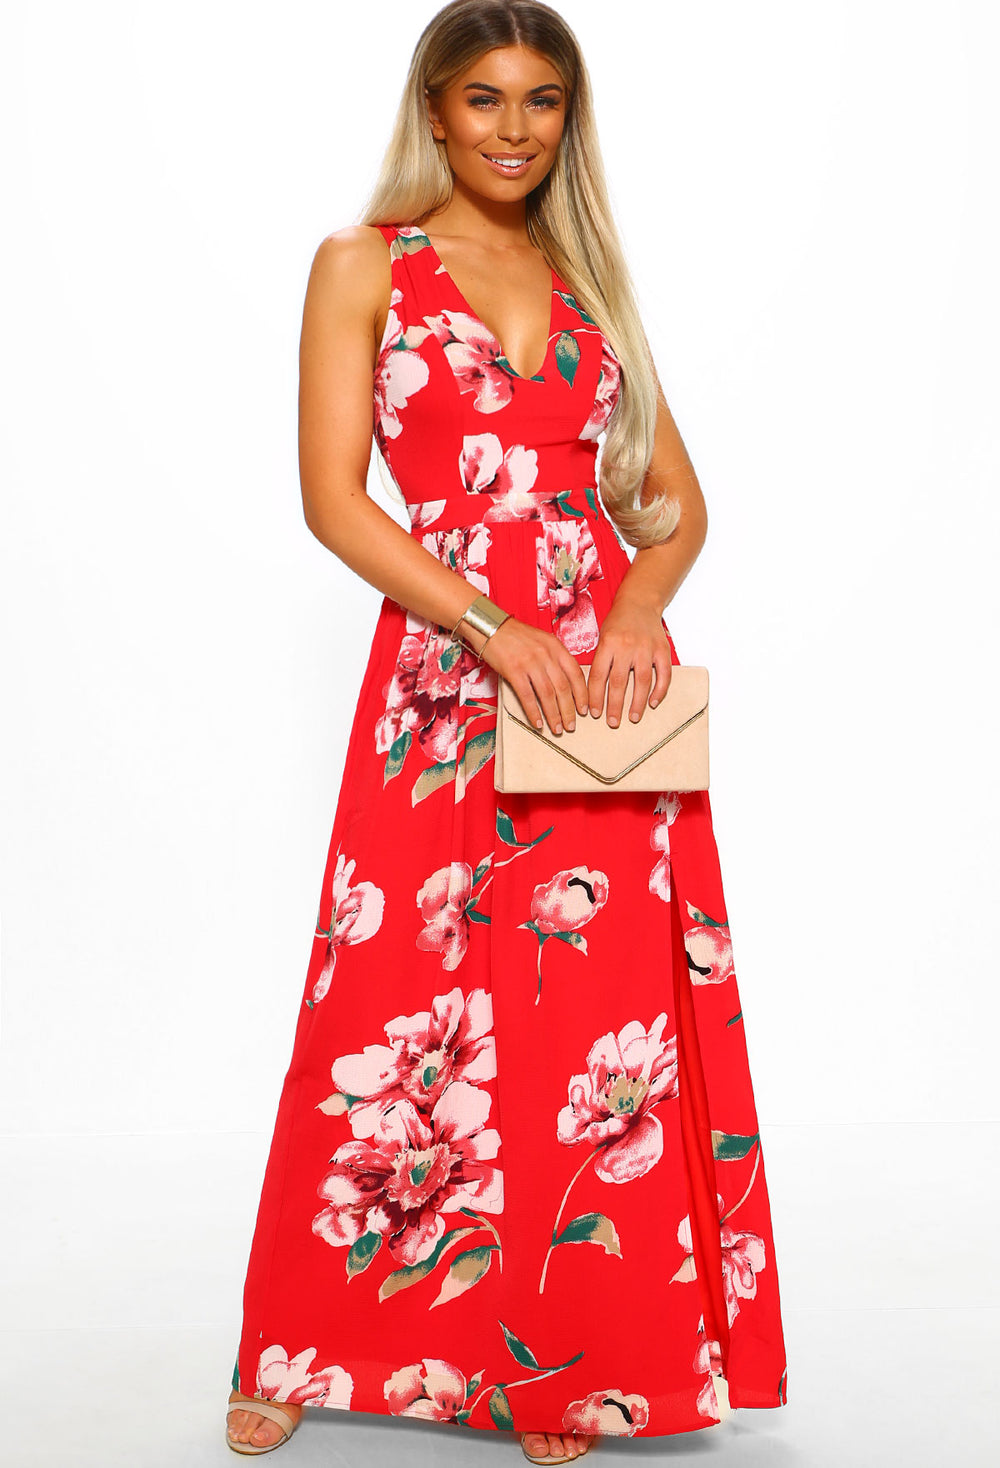 Majorca Beach Red Floral Maxi Dress ...